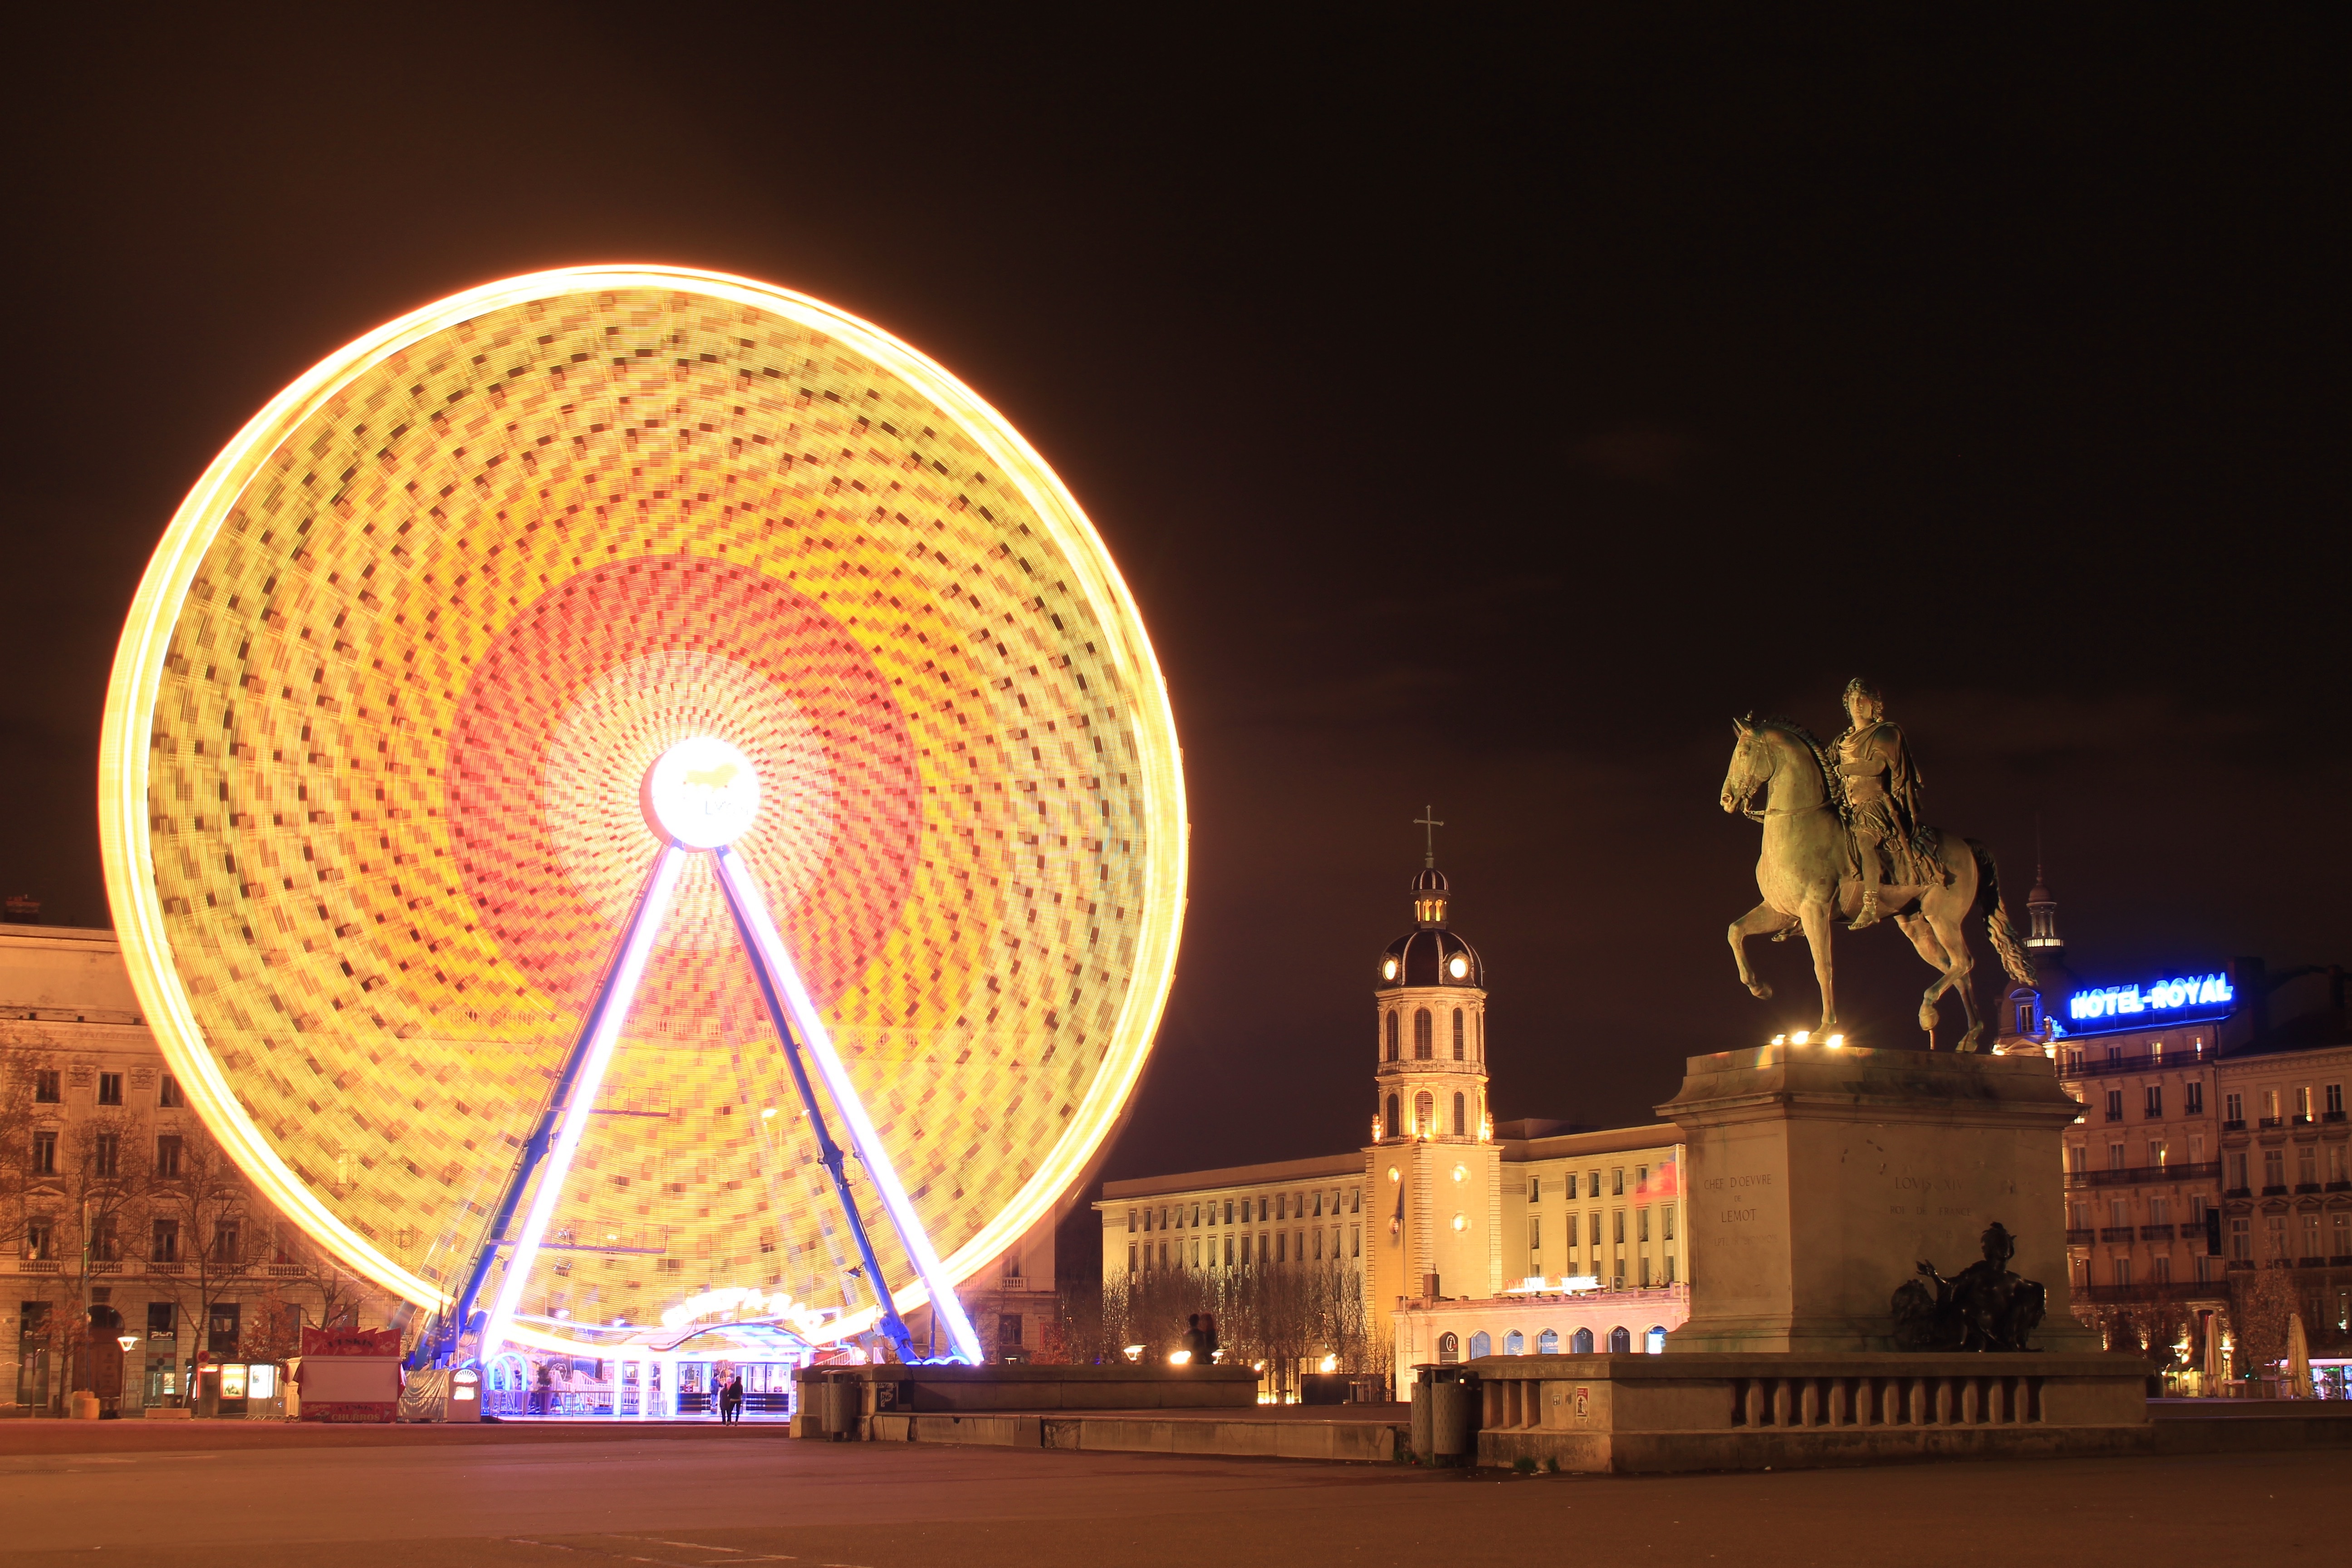 Ferris Wheel and Statue of King Louis XIV in La Place Bellecour Lyon, France by Thomas43